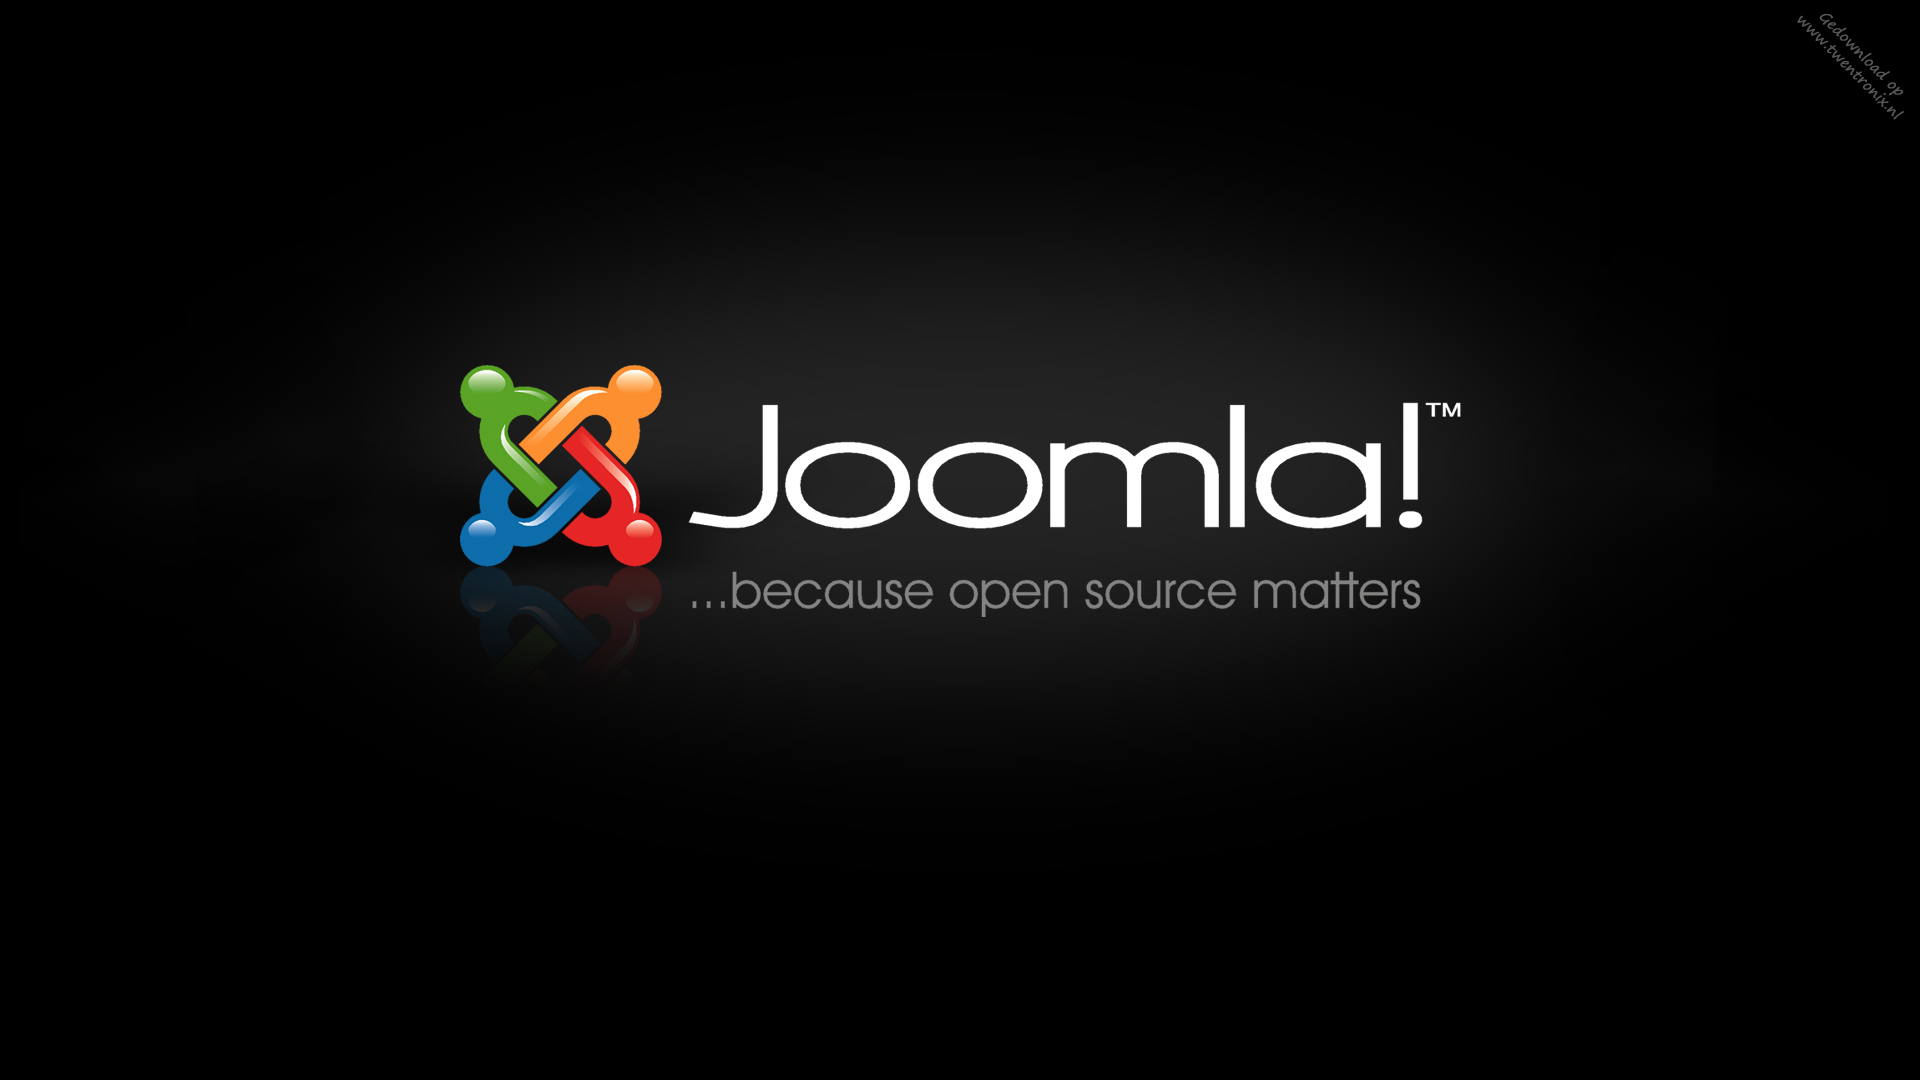 joomla-wallpaper-1920x1080.jpg